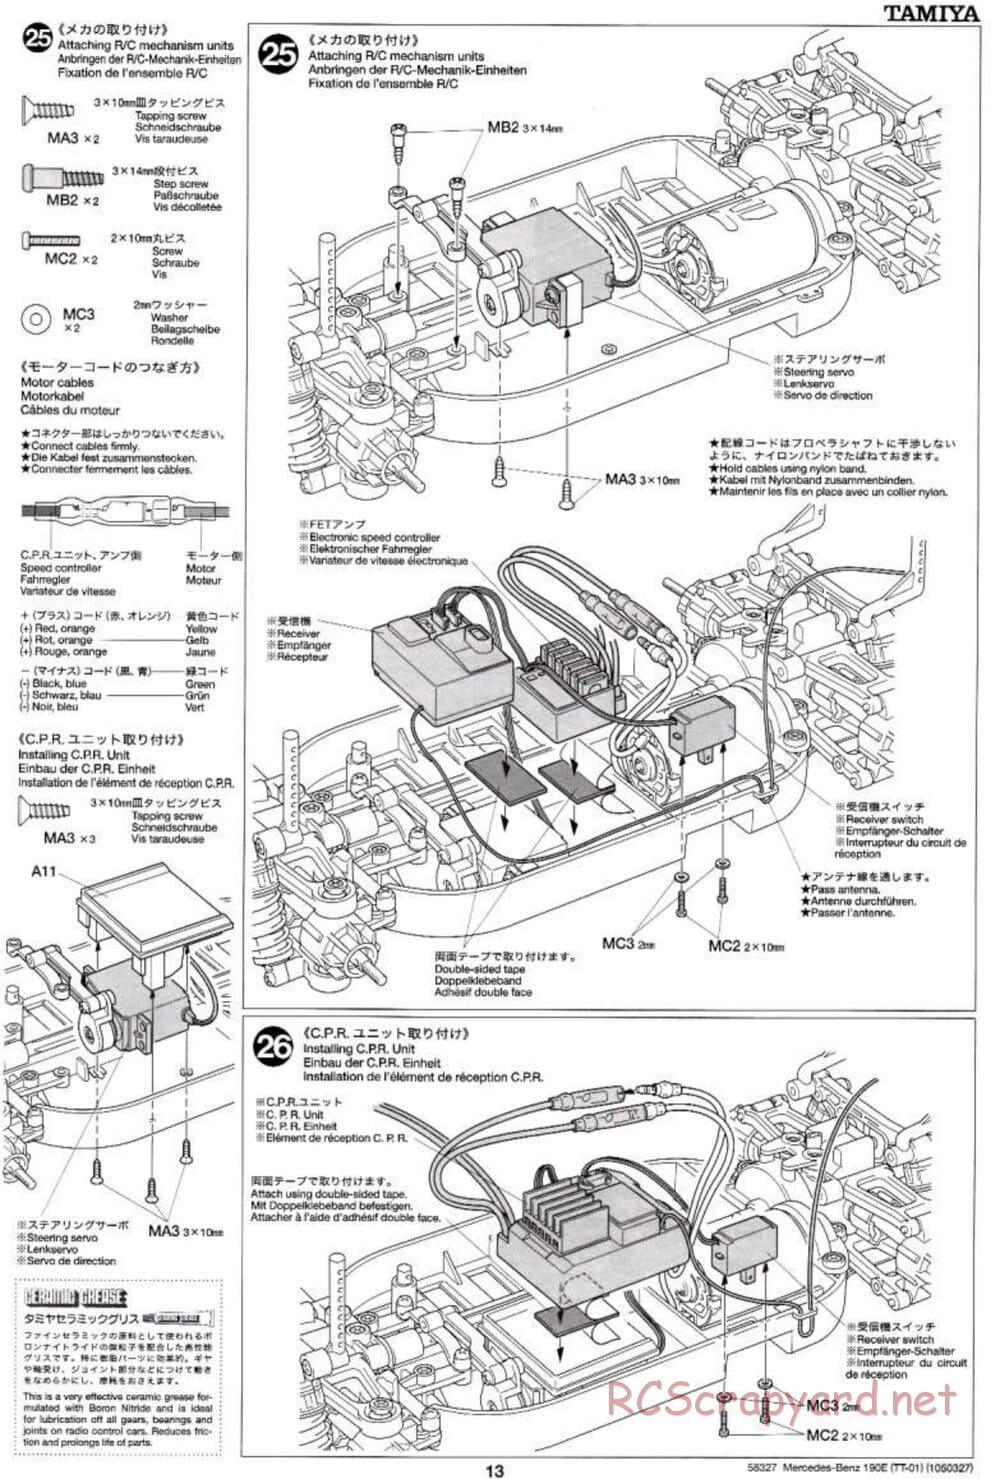 Tamiya - Mercedes Benz 190E Evo.II AMG - TT-01 Chassis - Manual - Page 13